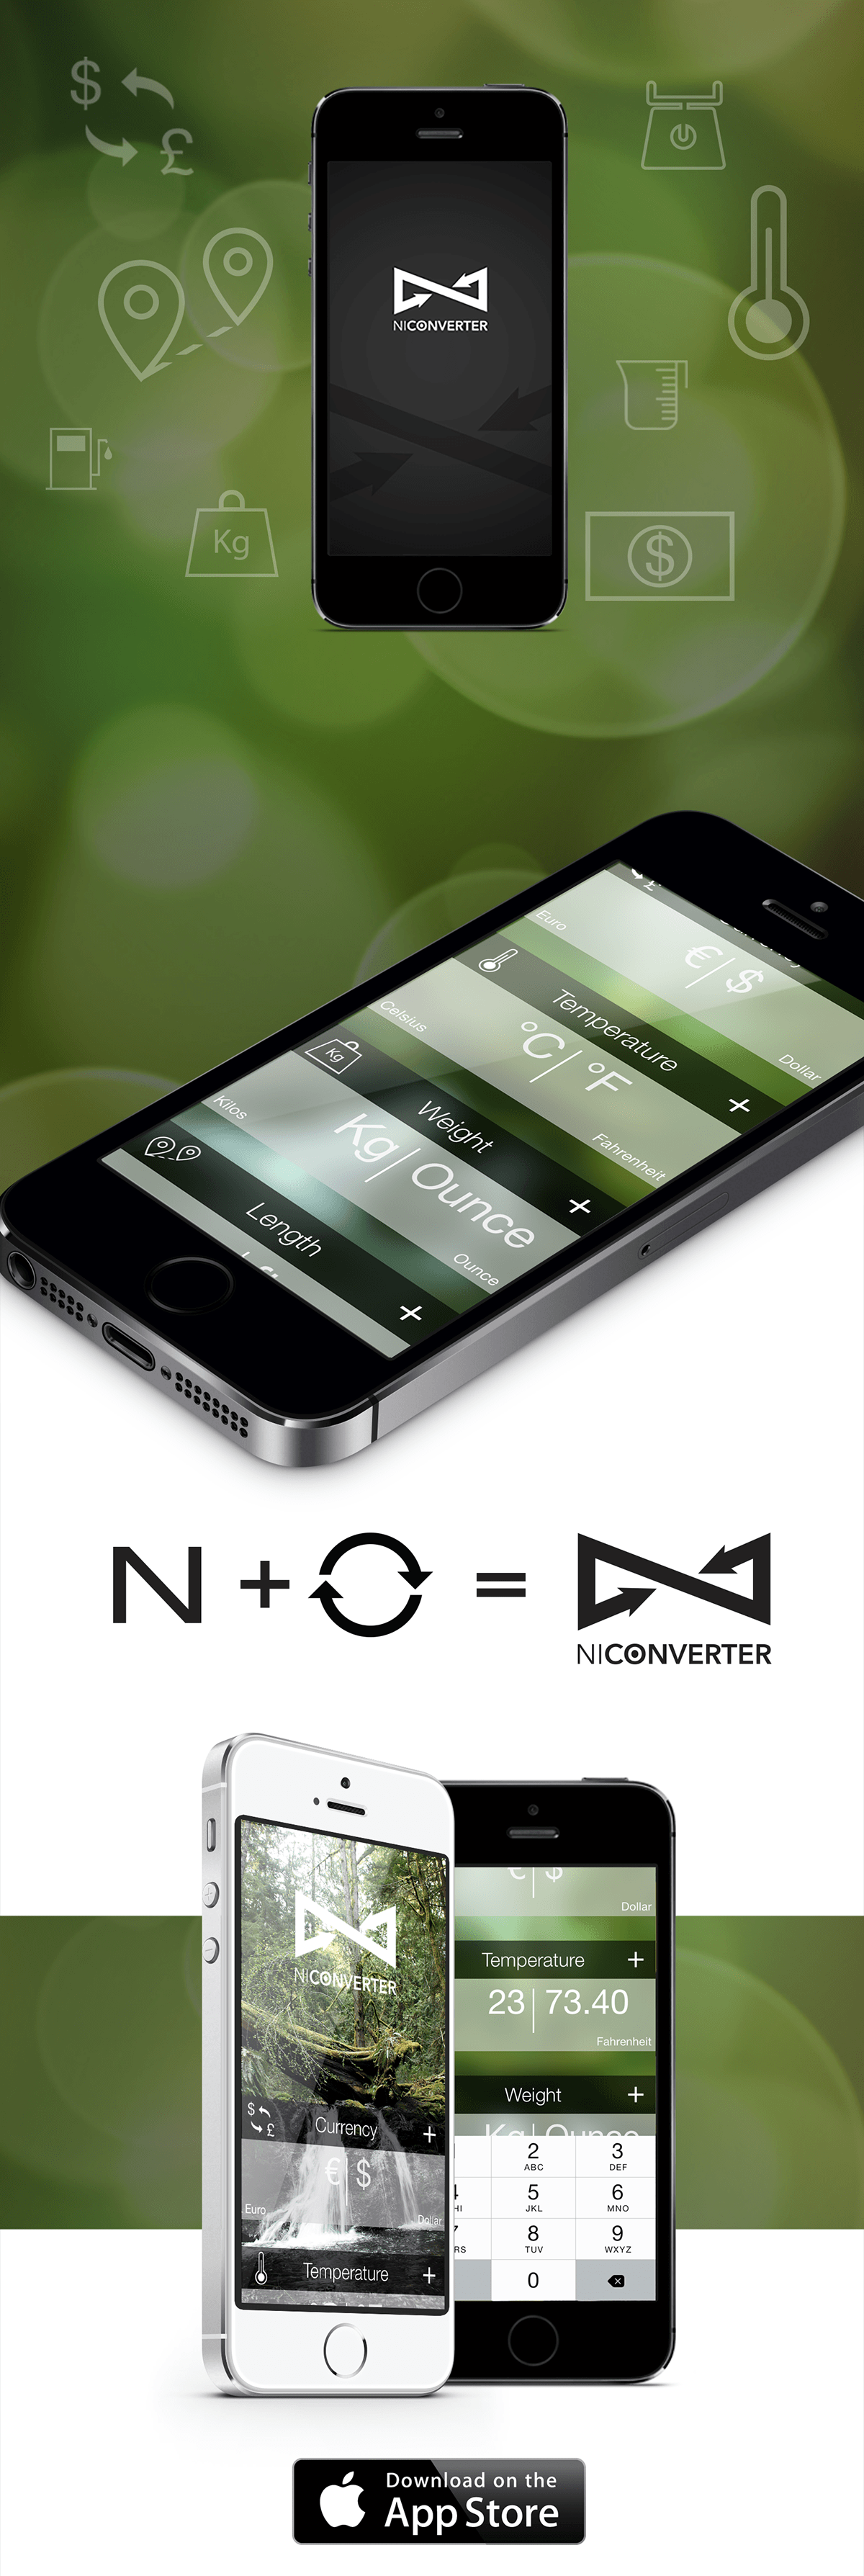 Niconverter app mobile design Converter ux UI product milles euros dollar unities